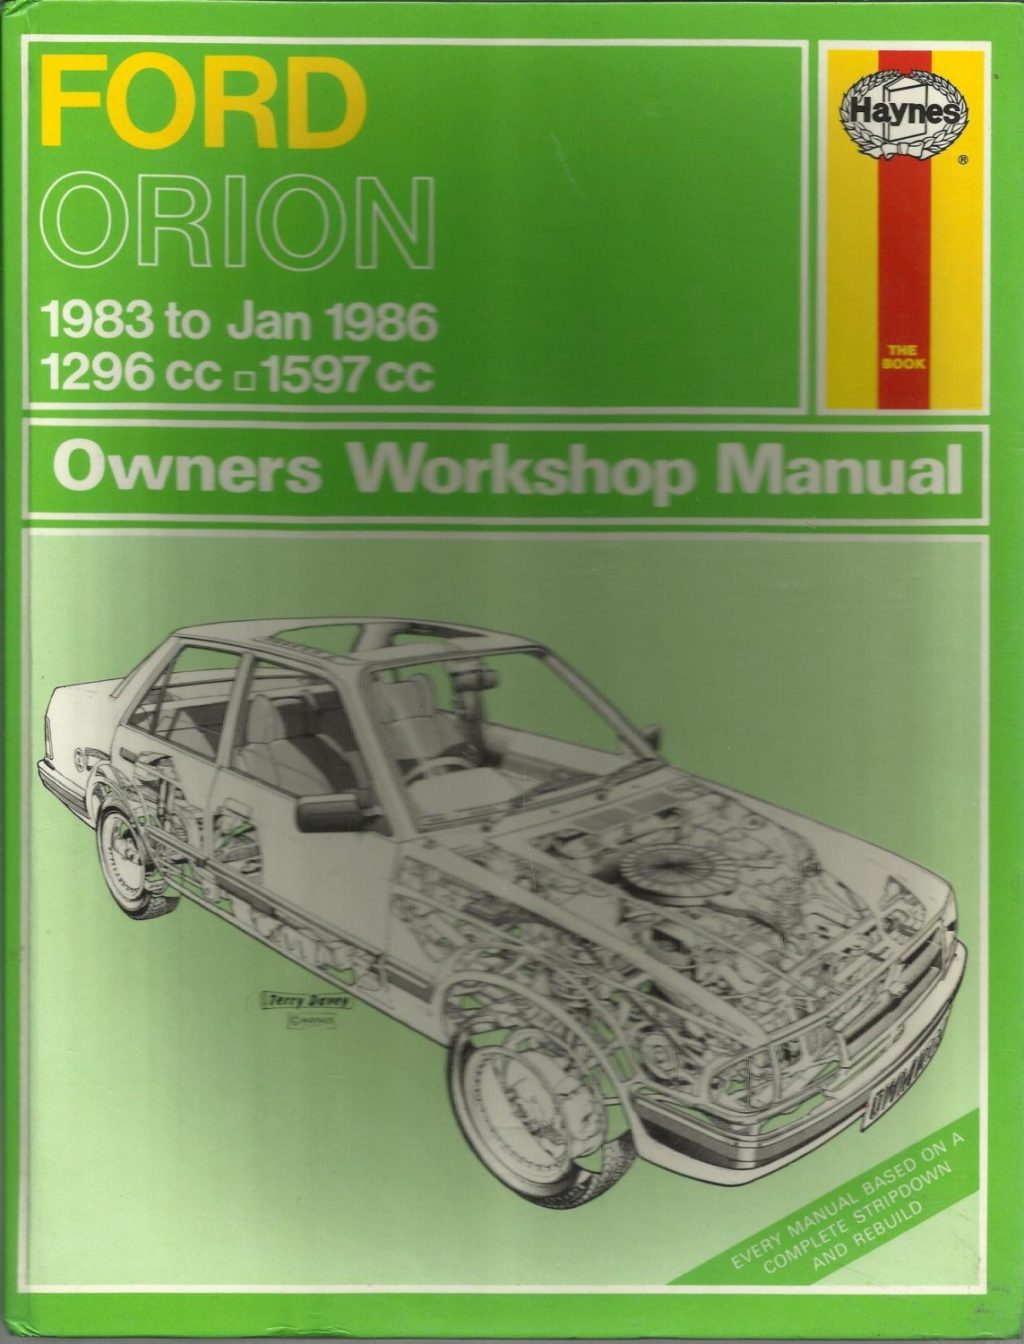 Ford Orion Owner’s Workshop Manual / Car Handbook – 1983 to 1990 / EVE